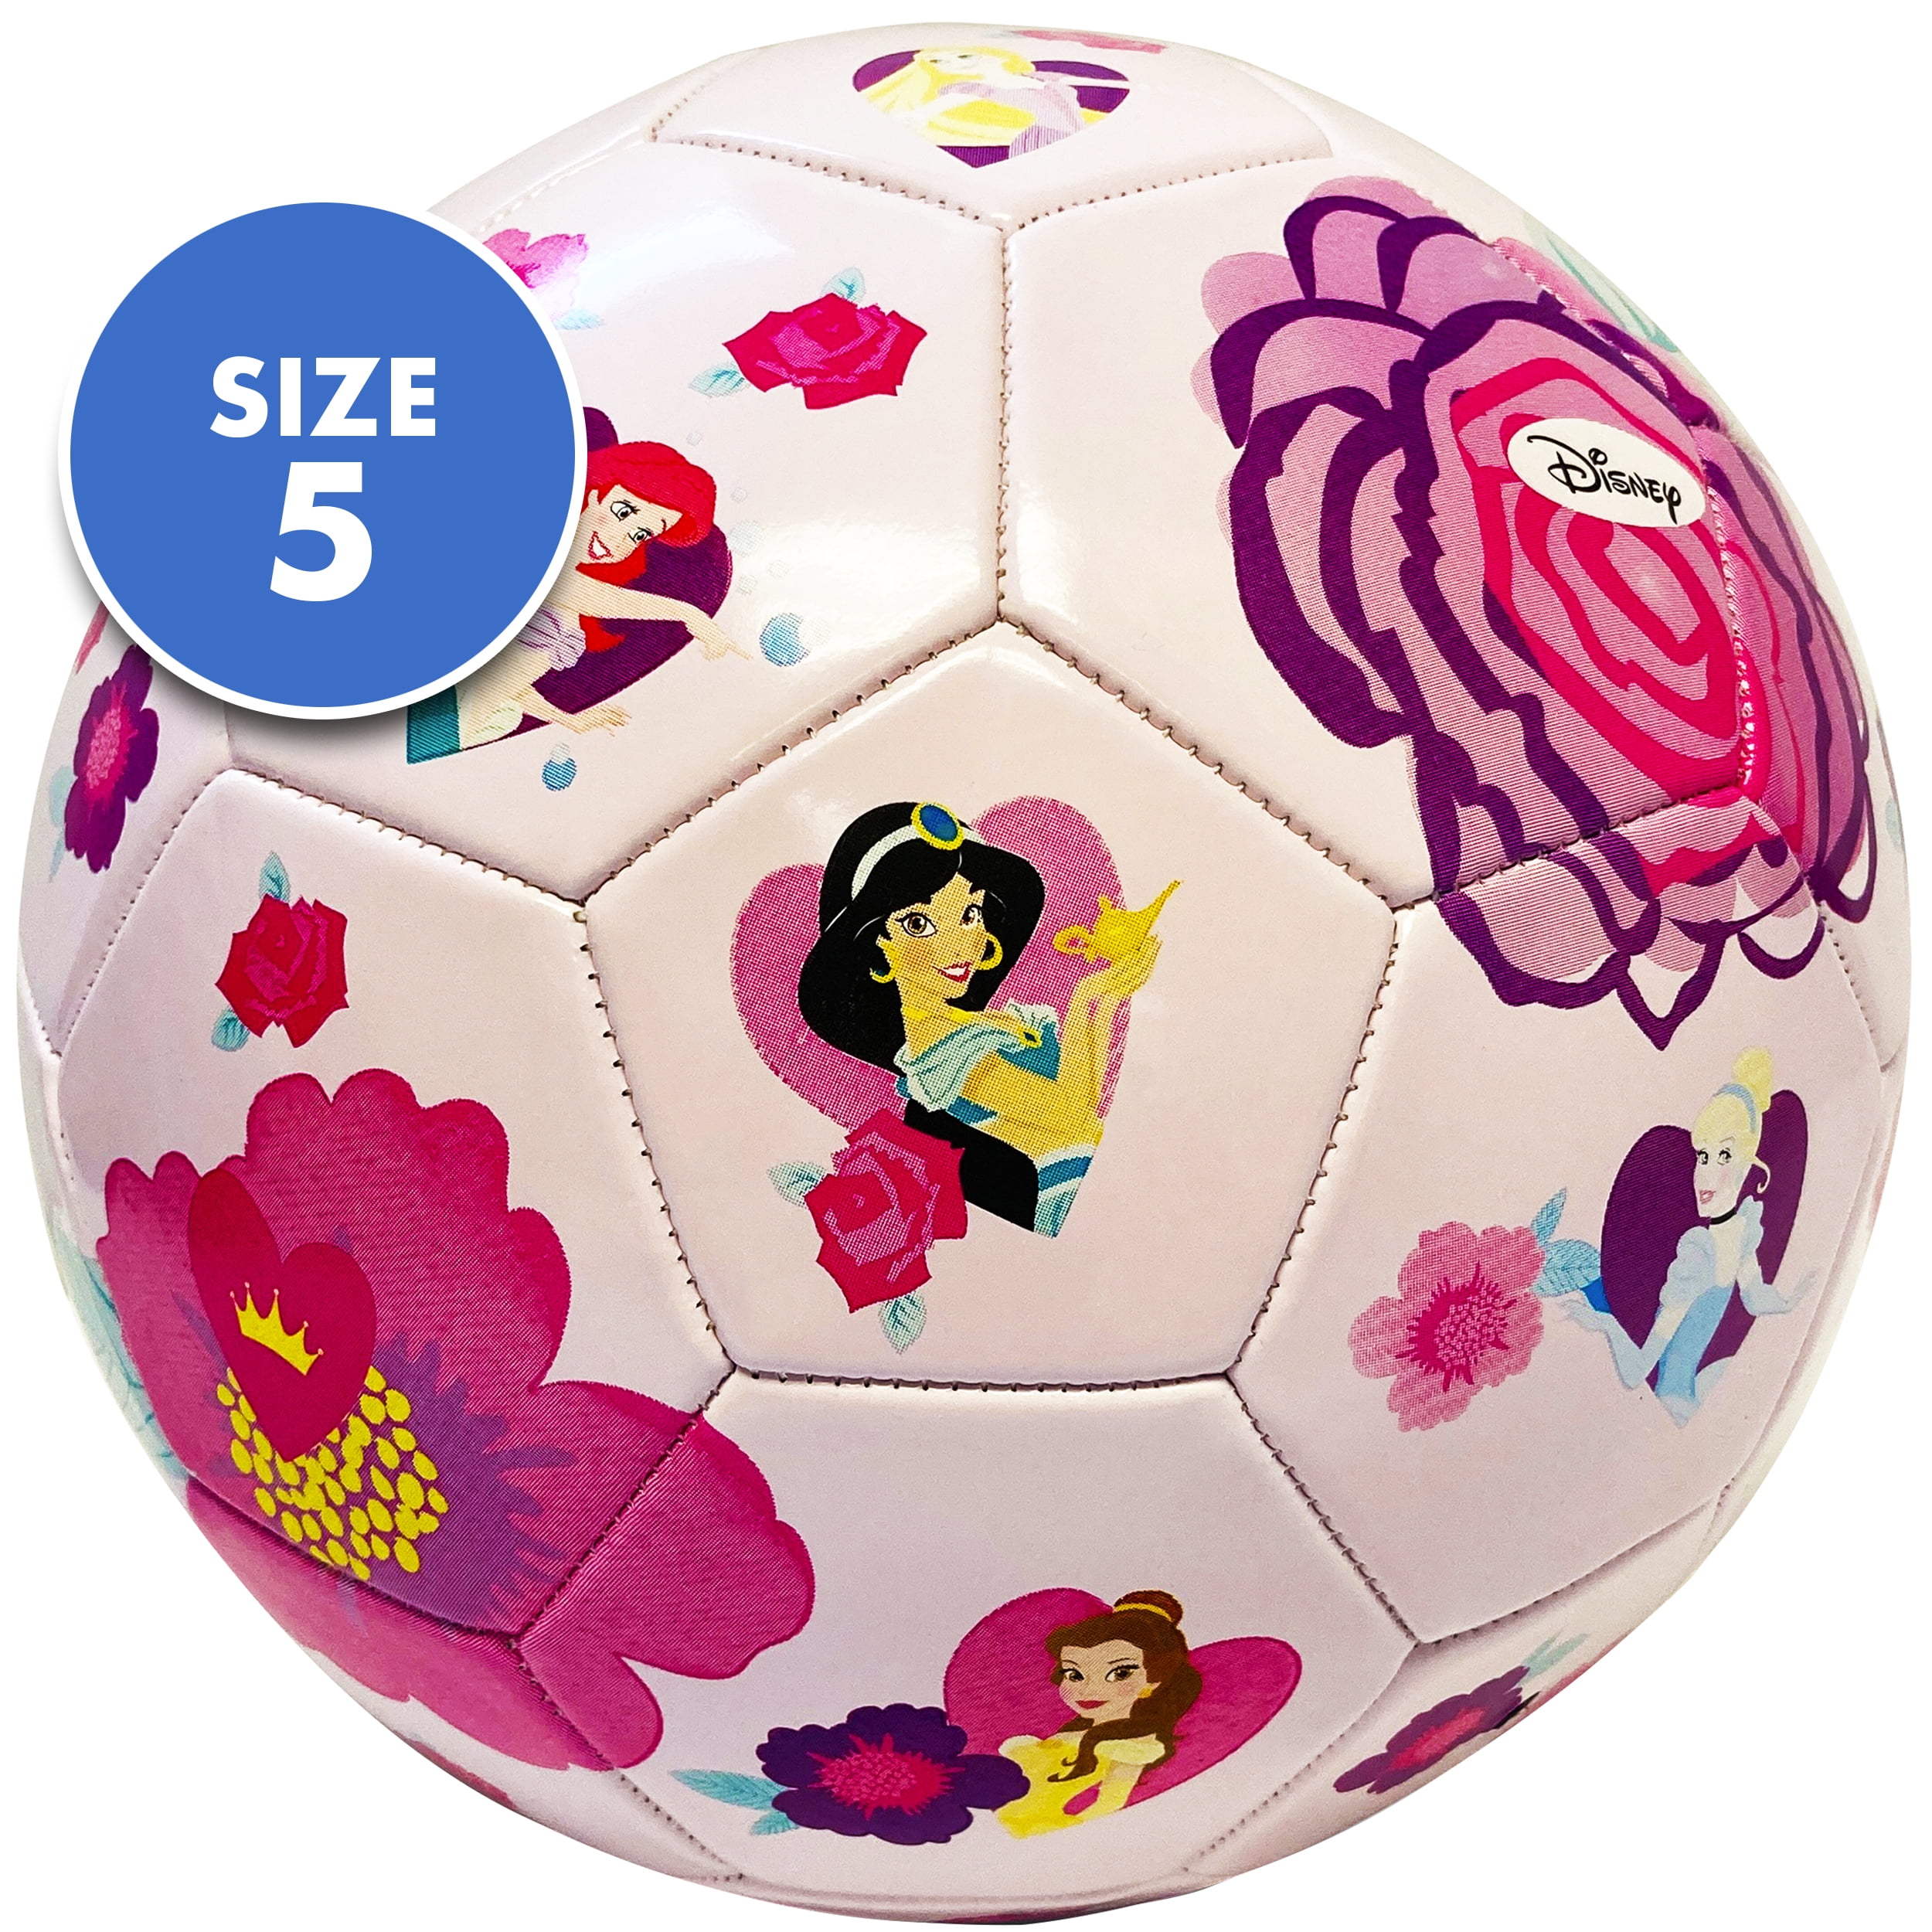 Size 1 Mini Soccer-Ball football For Kids Hand Stitch Soft 